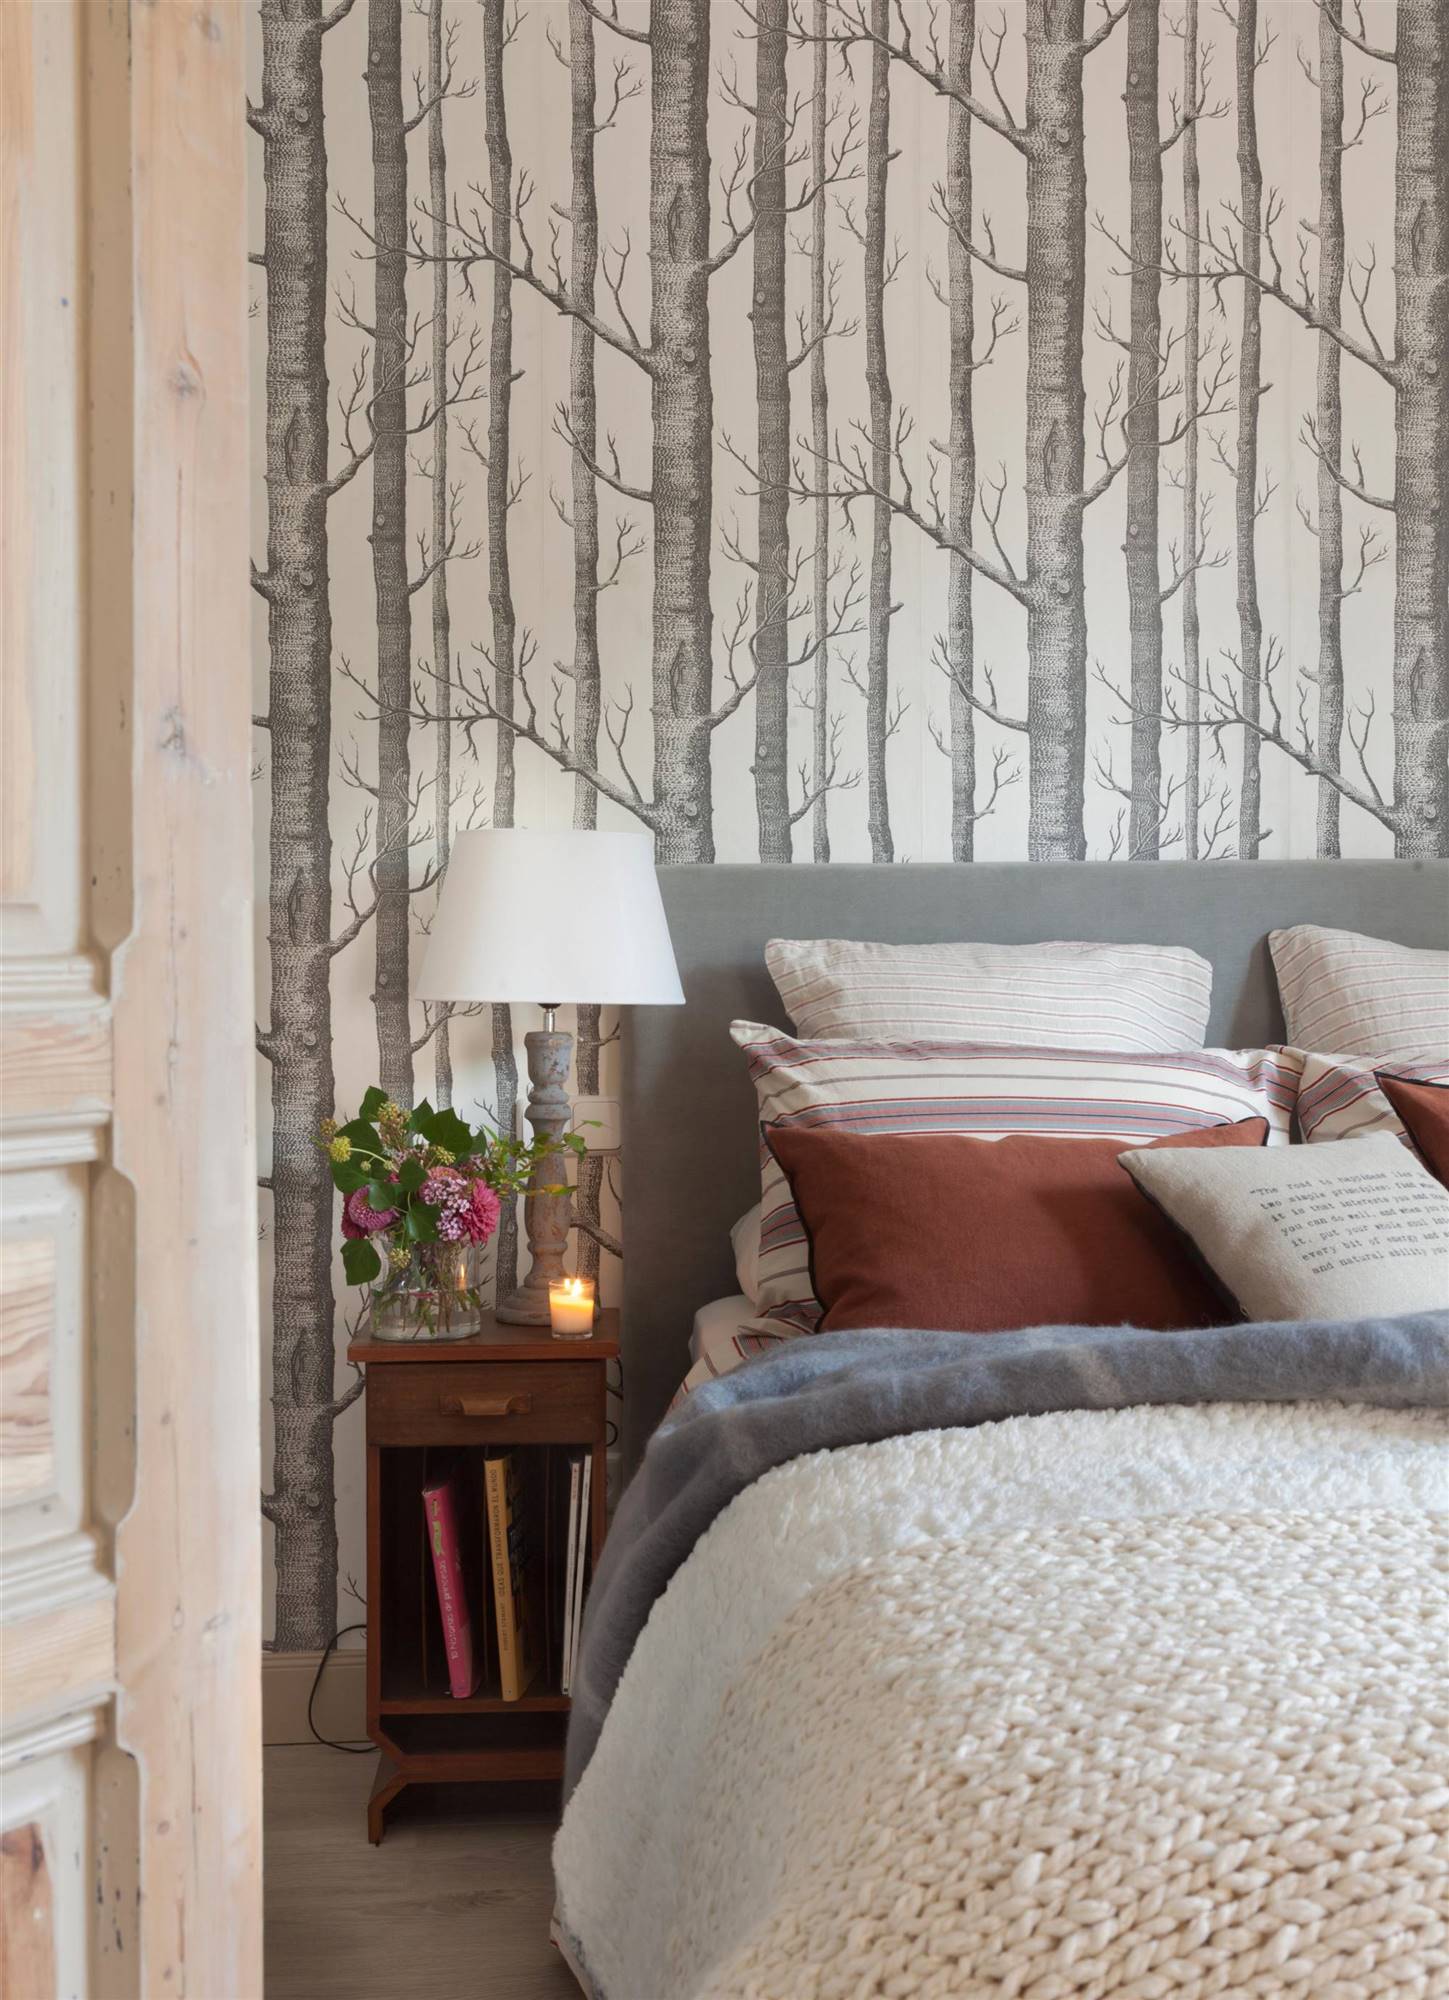 Dormitorio con papel pintado que imita un bosque. 